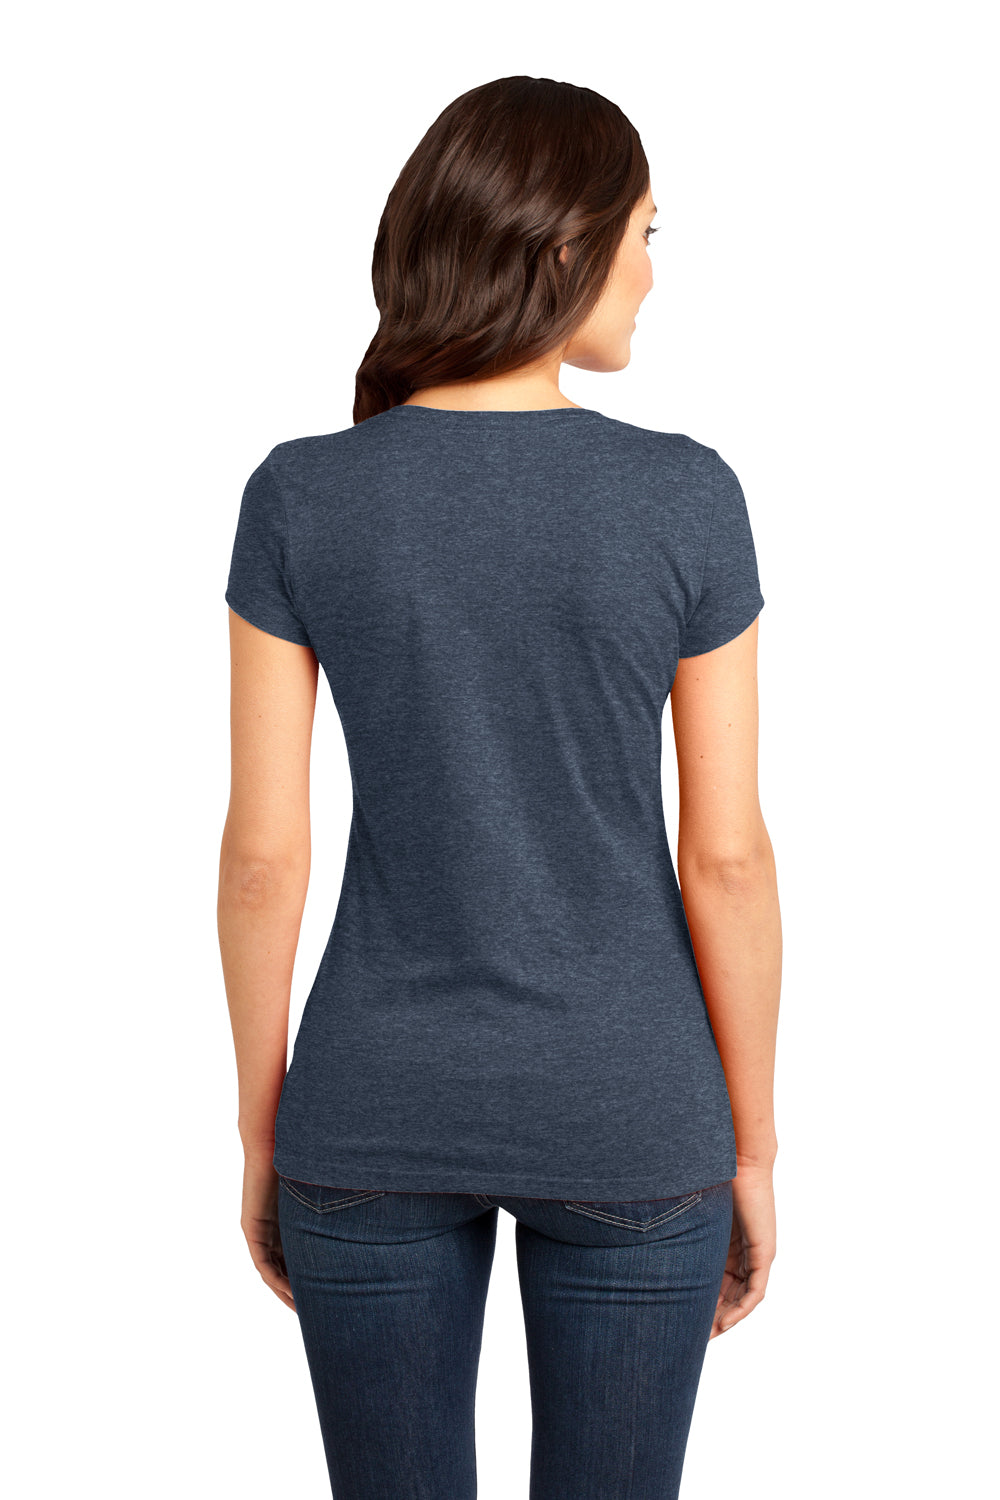 District DT6001 Womens Very Important Short Sleeve Crewneck T-Shirt Heather Navy Blue Back